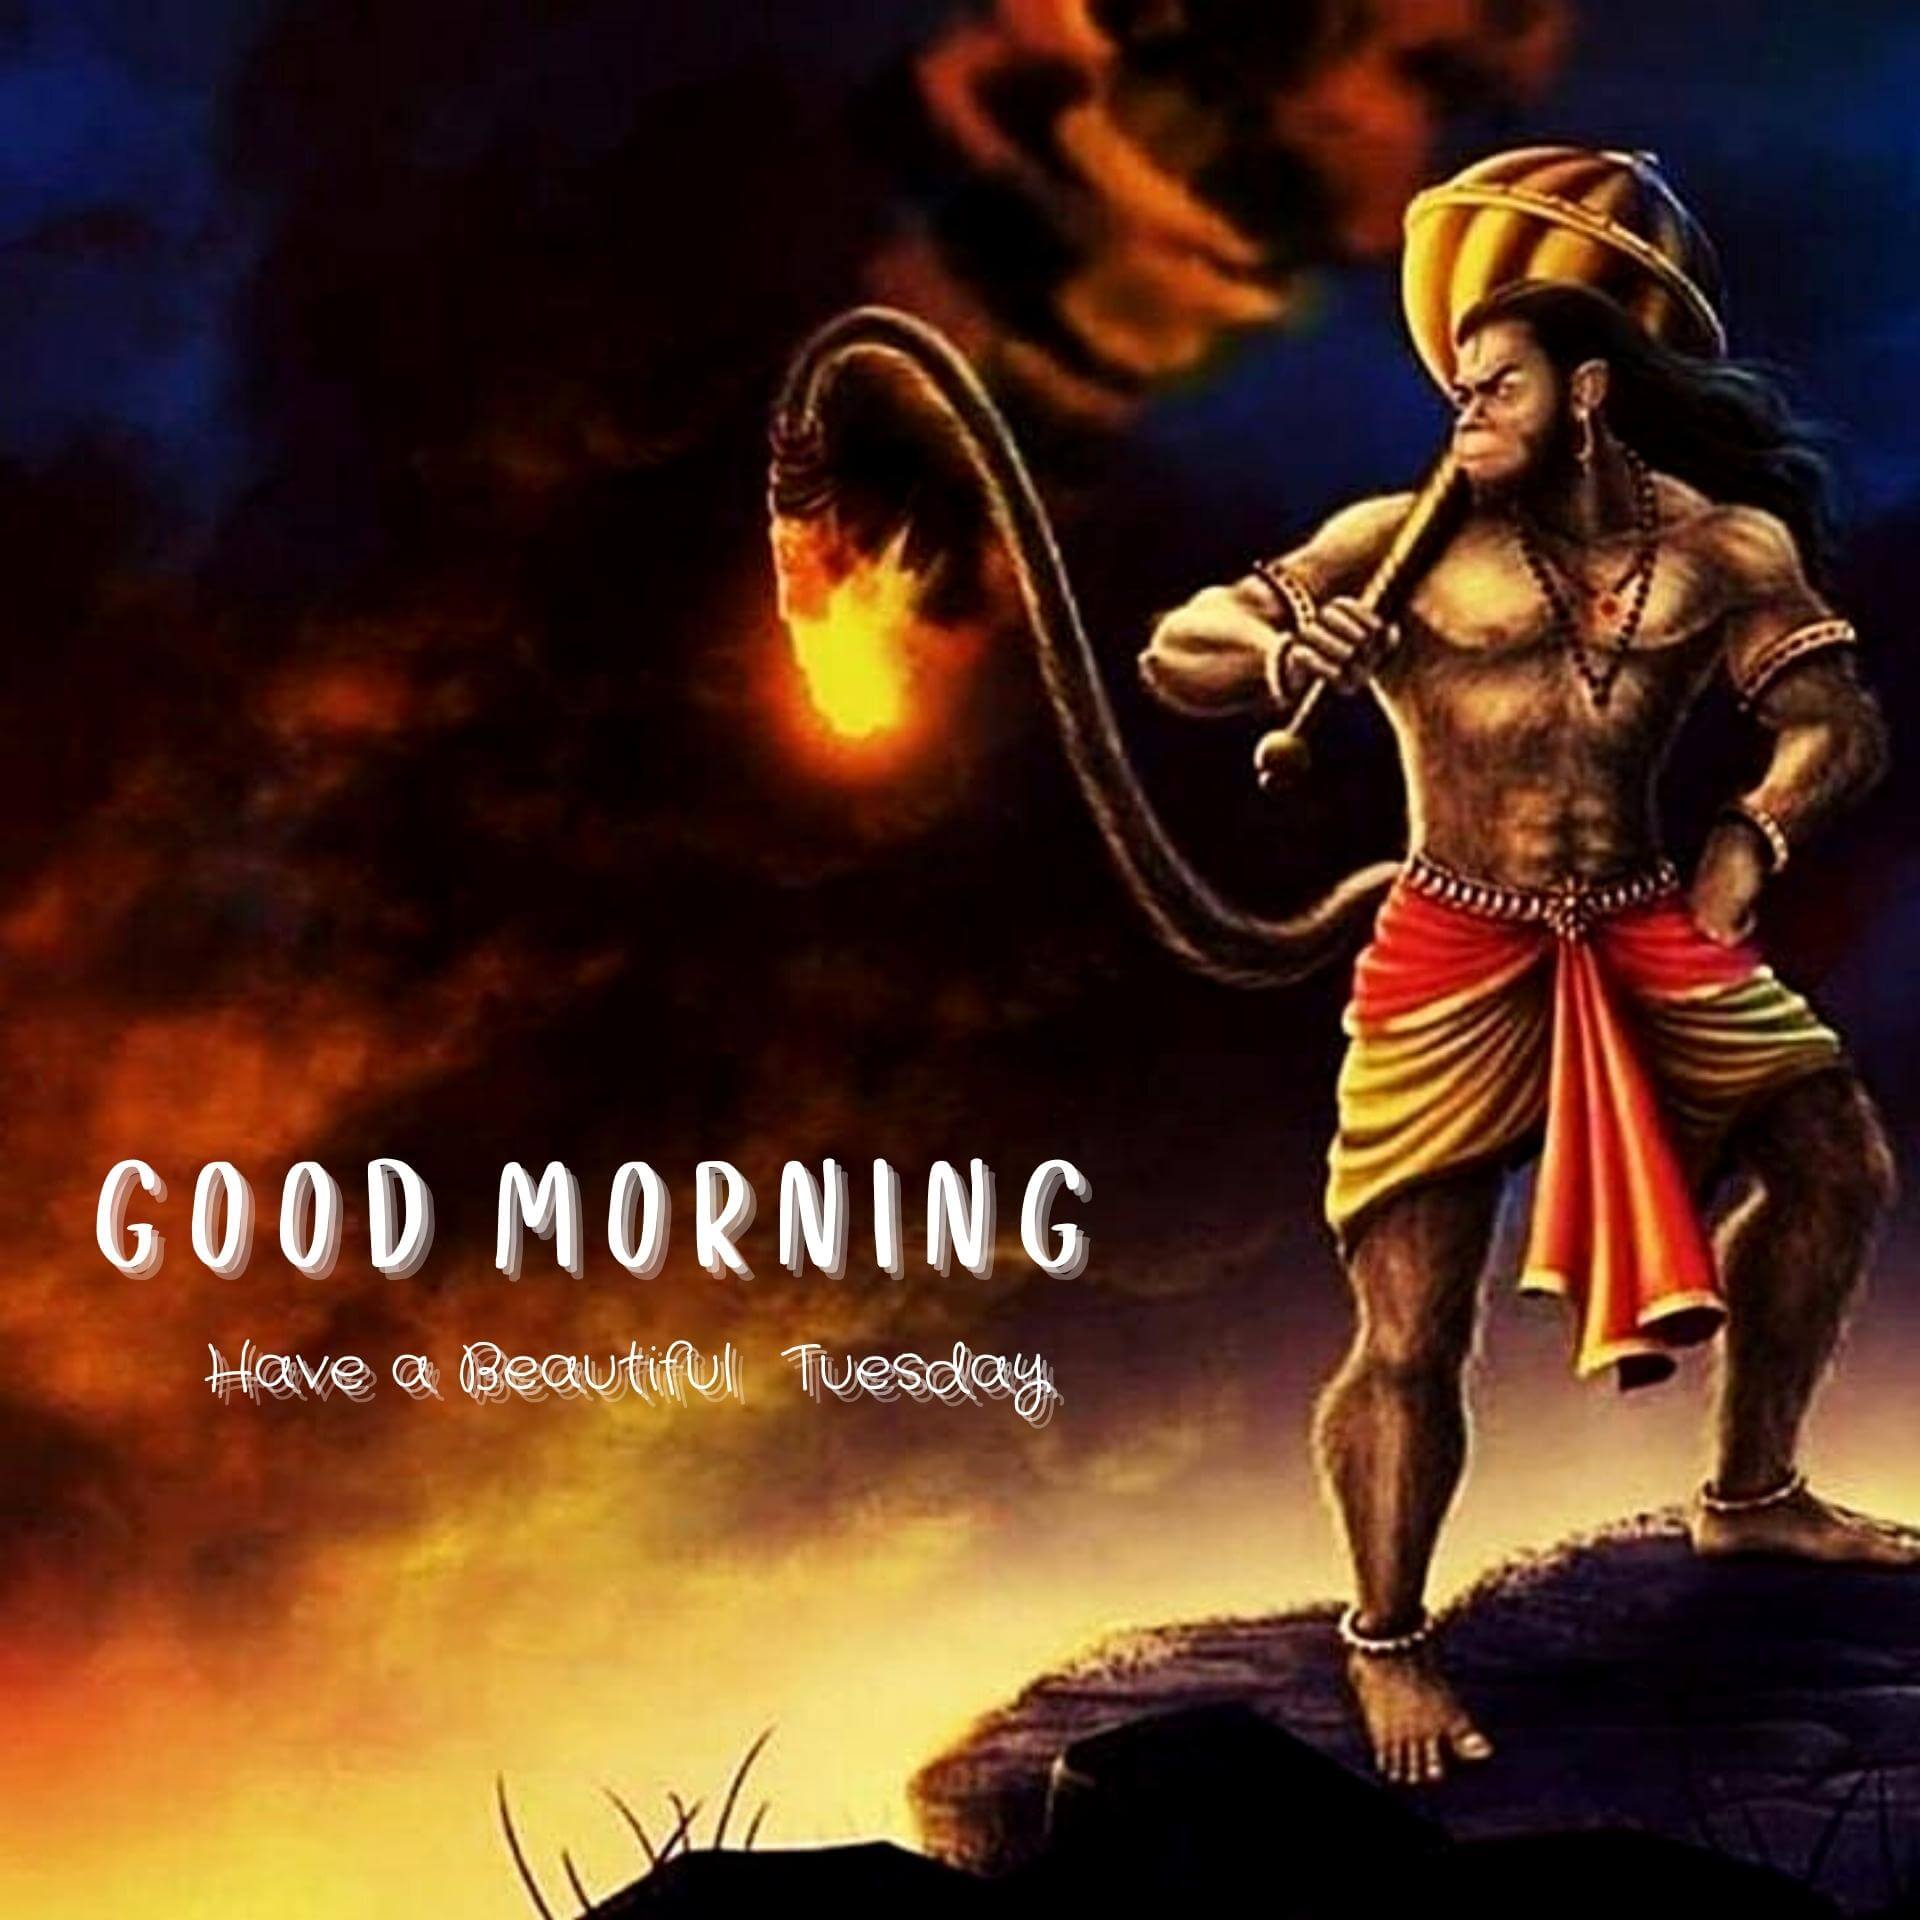 God Hanuman JITuesday good morning Wallpaper Download Free